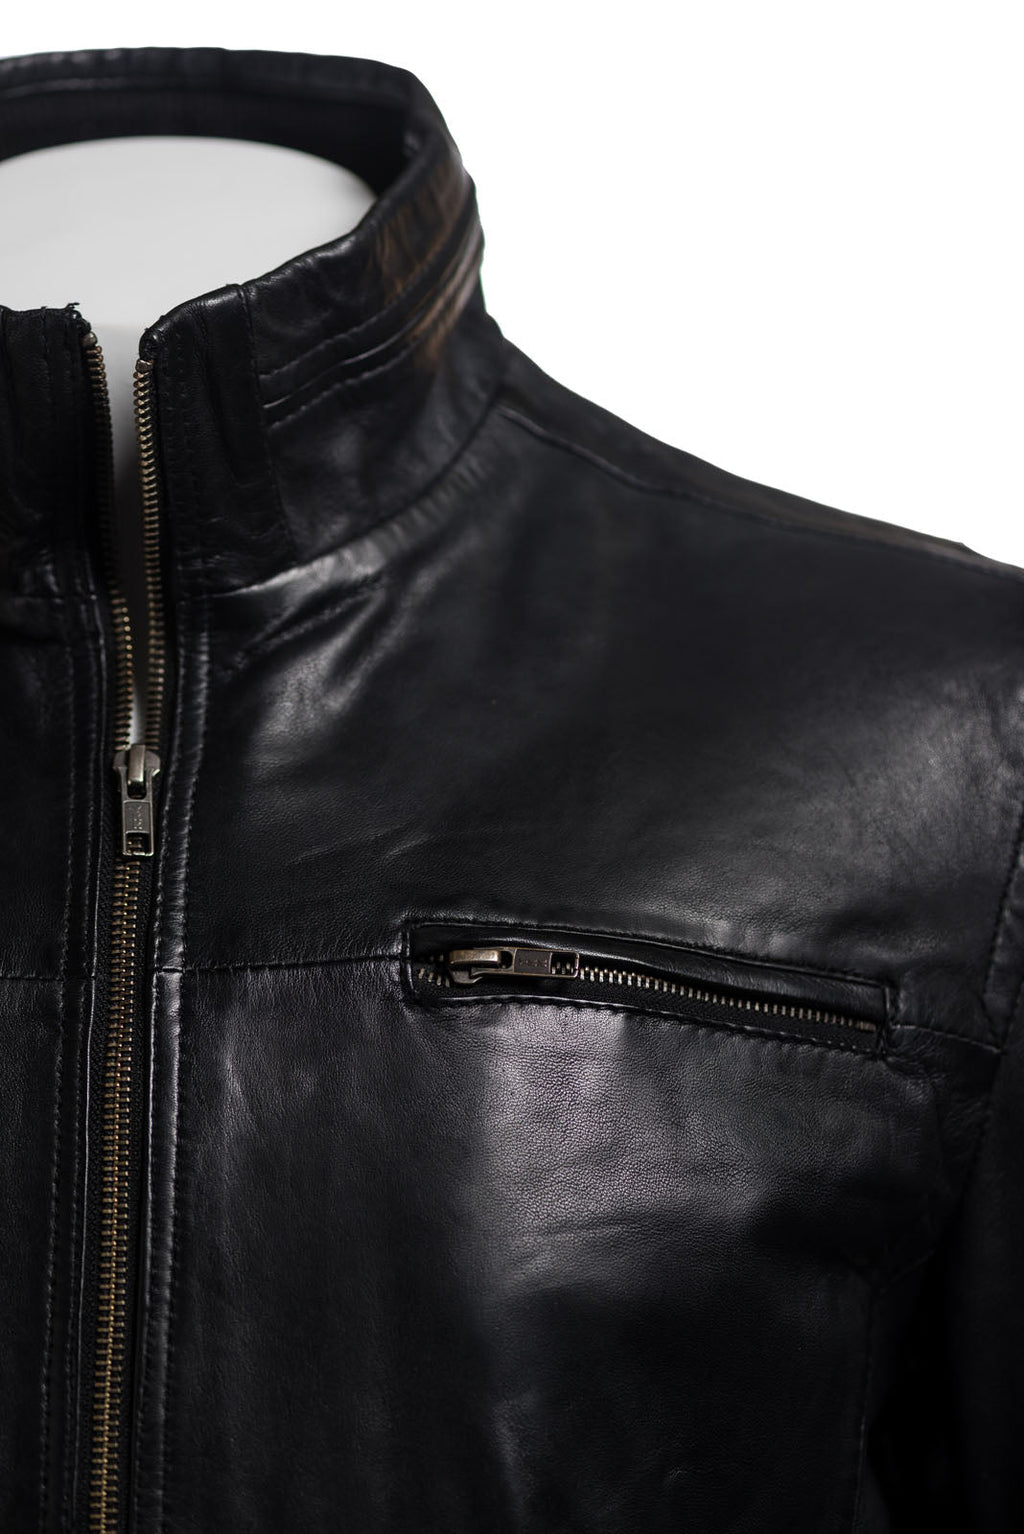 Men's Black Funnel Neck Leather Jacket: Luigi